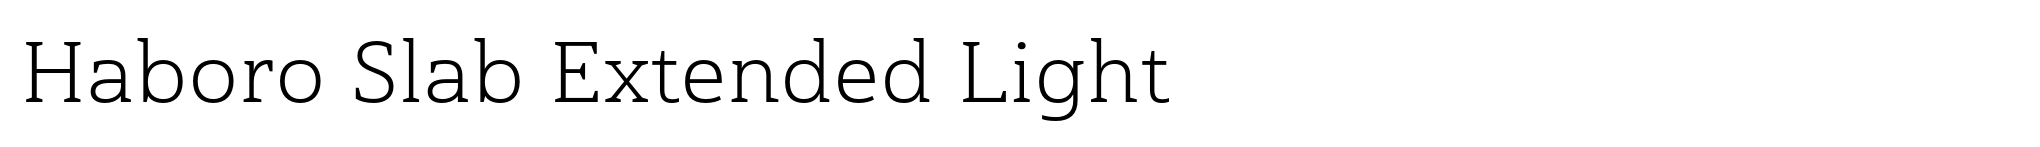 Haboro Slab Extended Light image